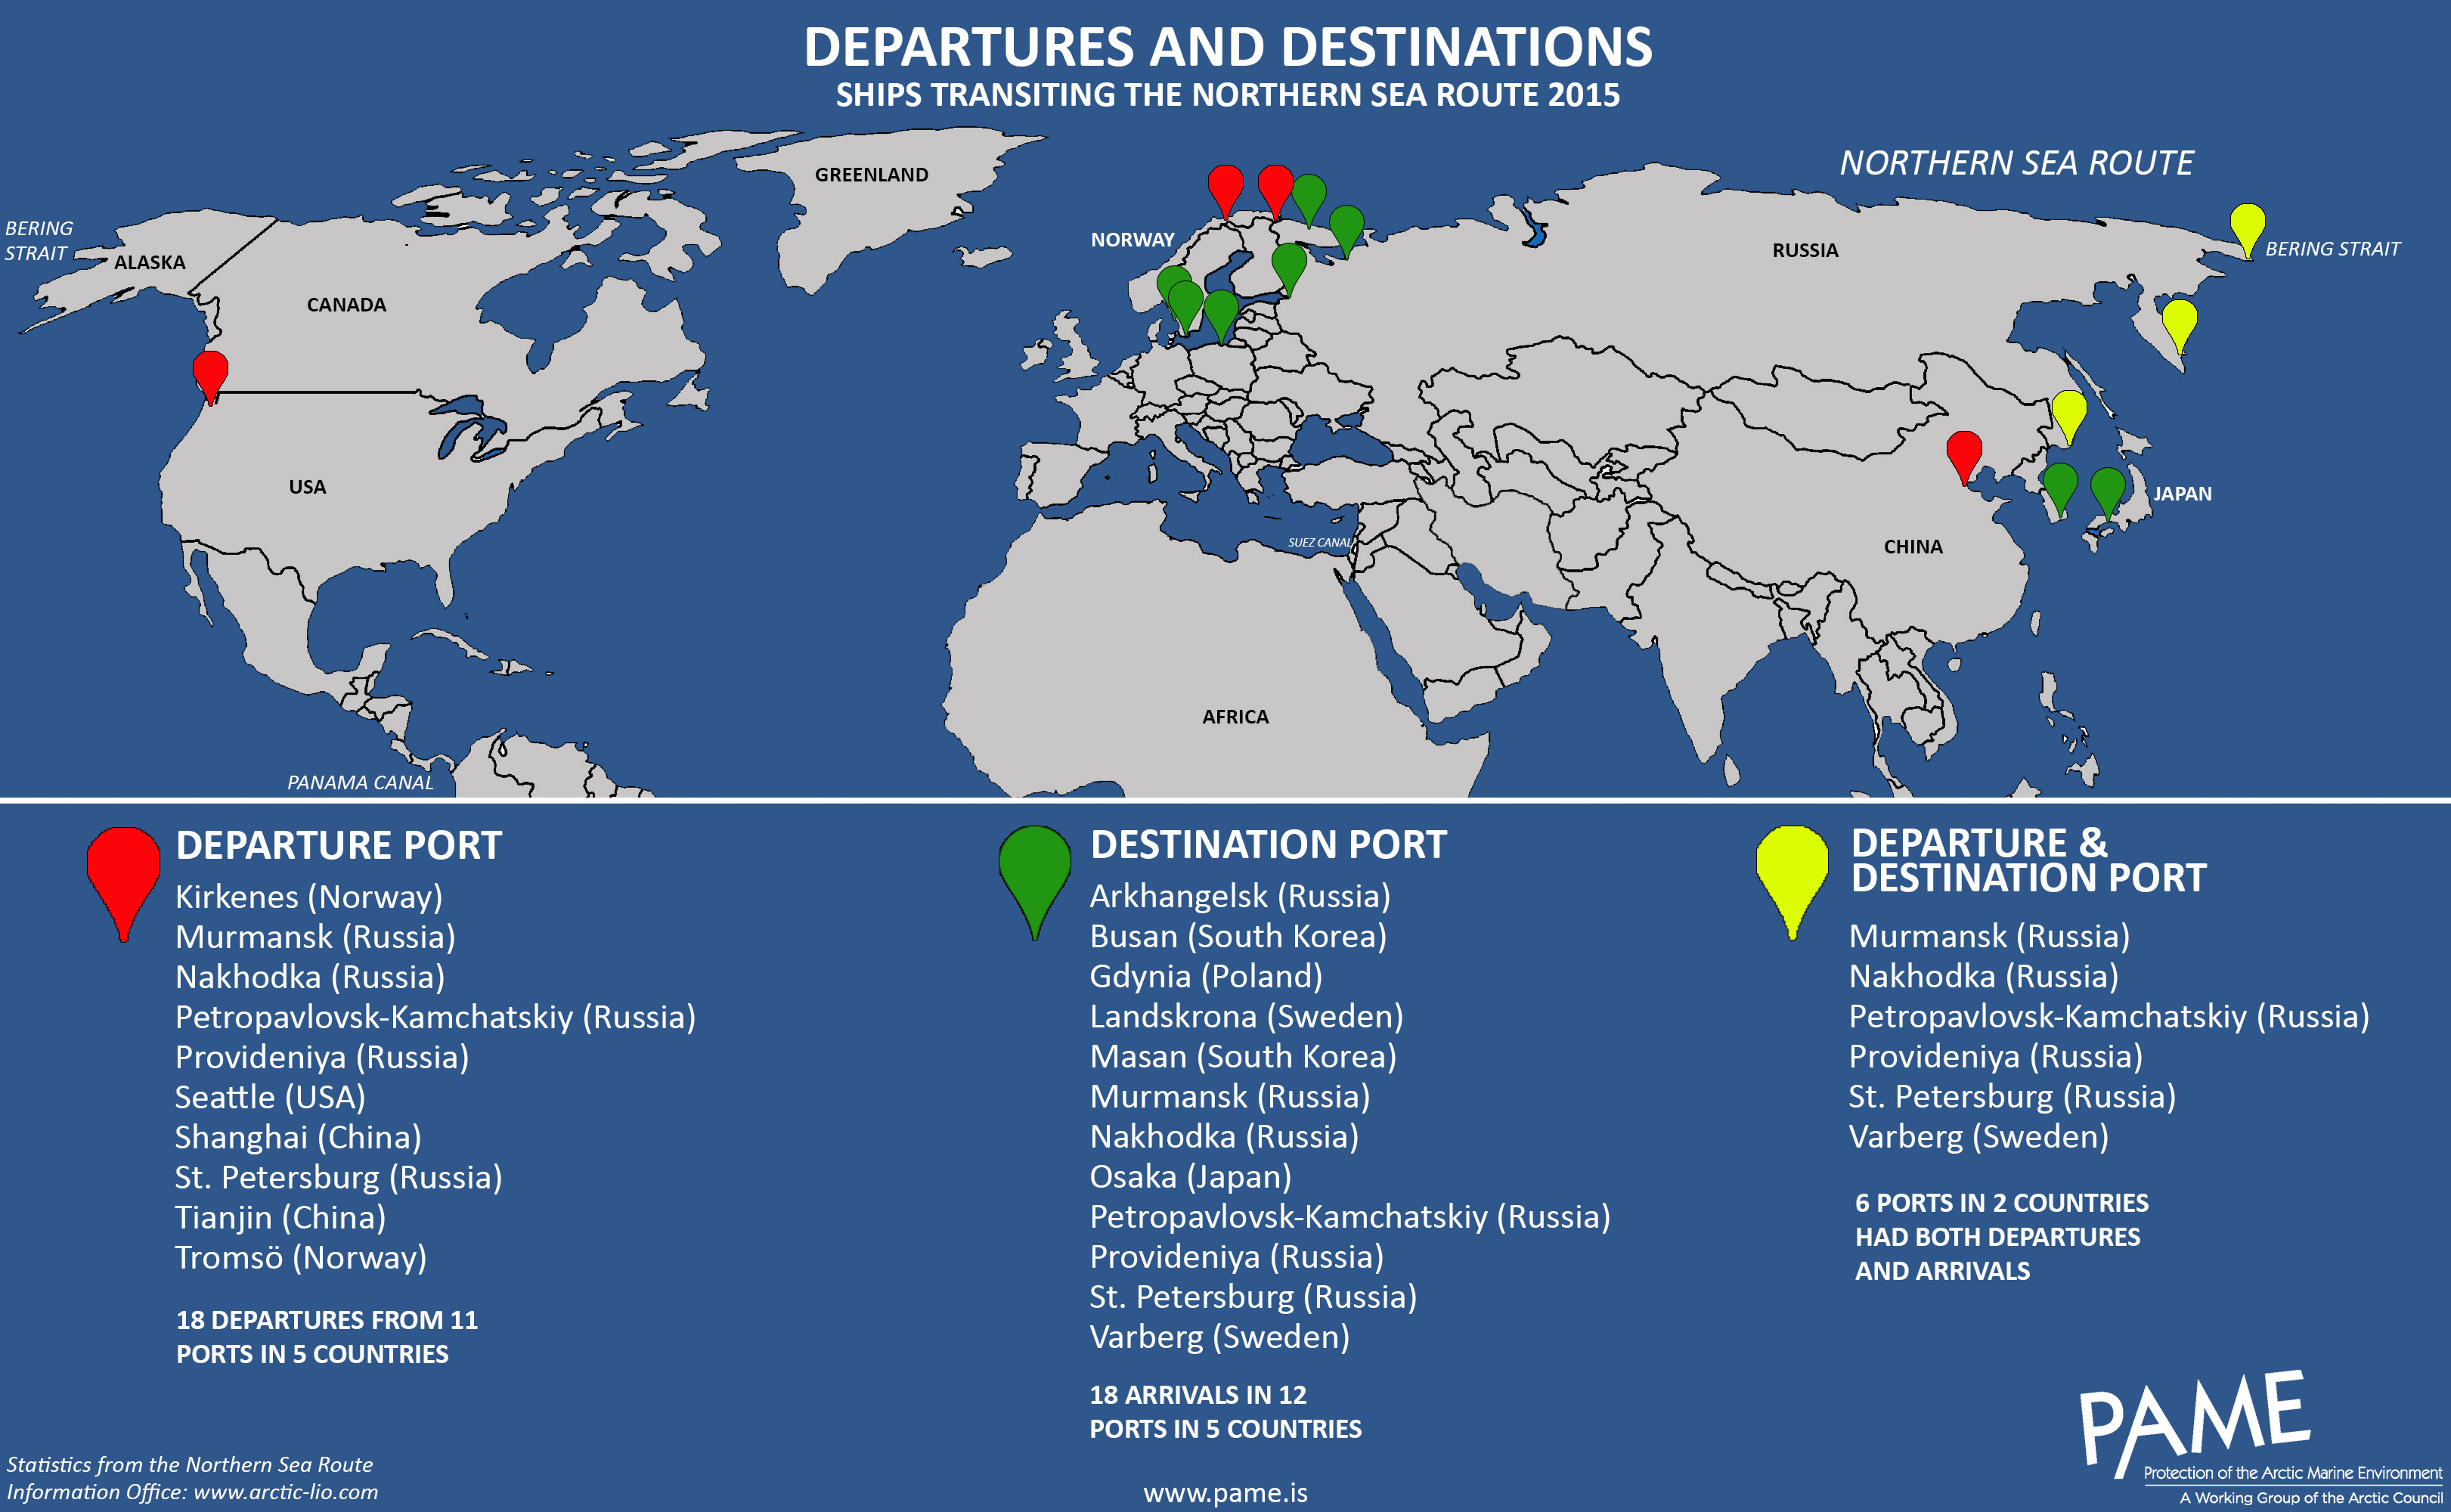 depaertures-and-destinations-map-2011-2015